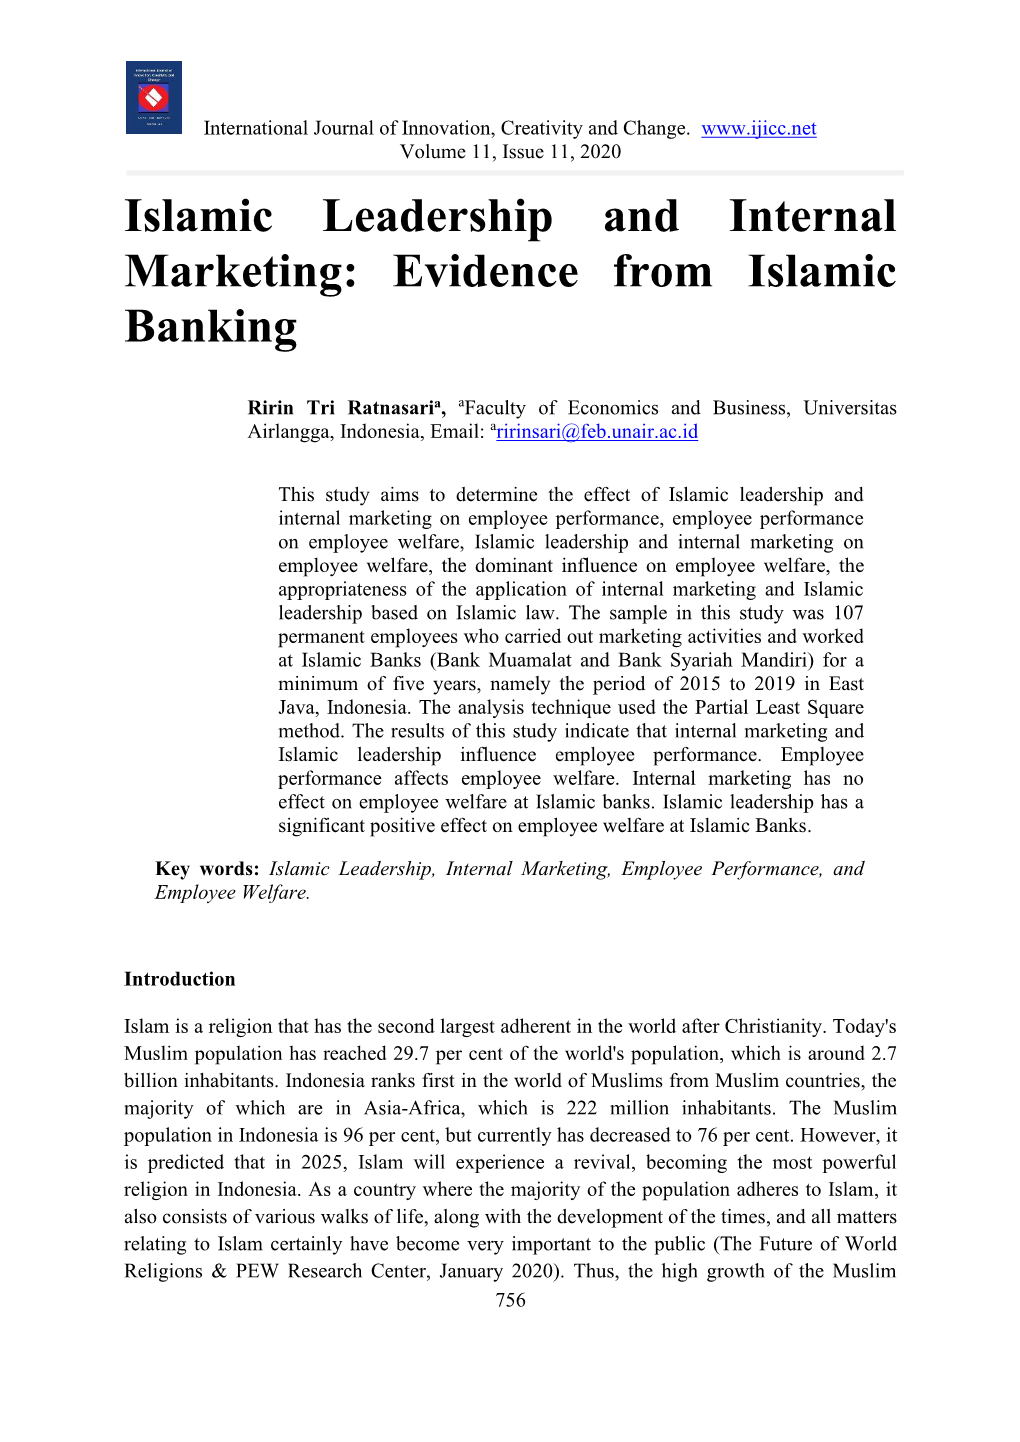 Islamic Leadership and Internal Marketing: Evidence from Islamic Banking